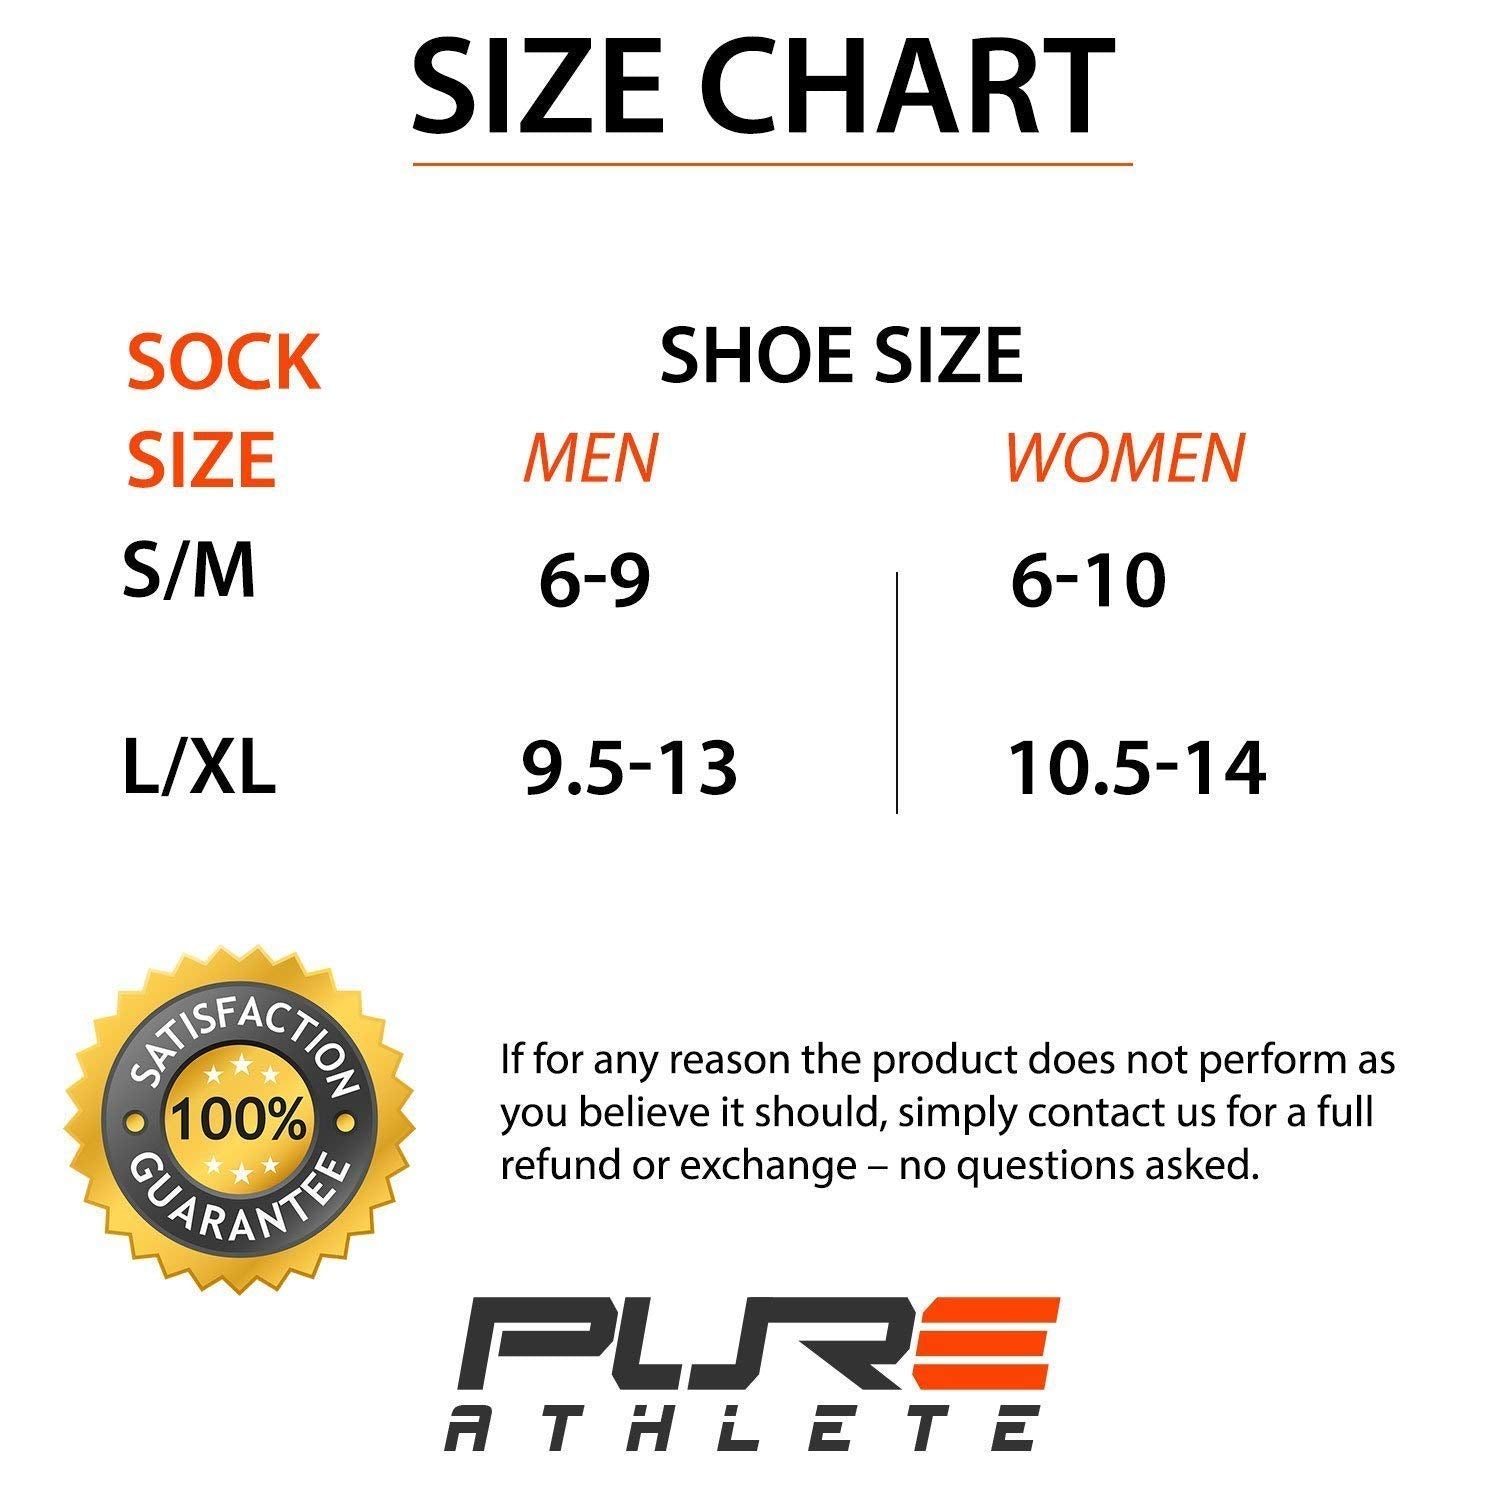 Print Wool Ski Socks